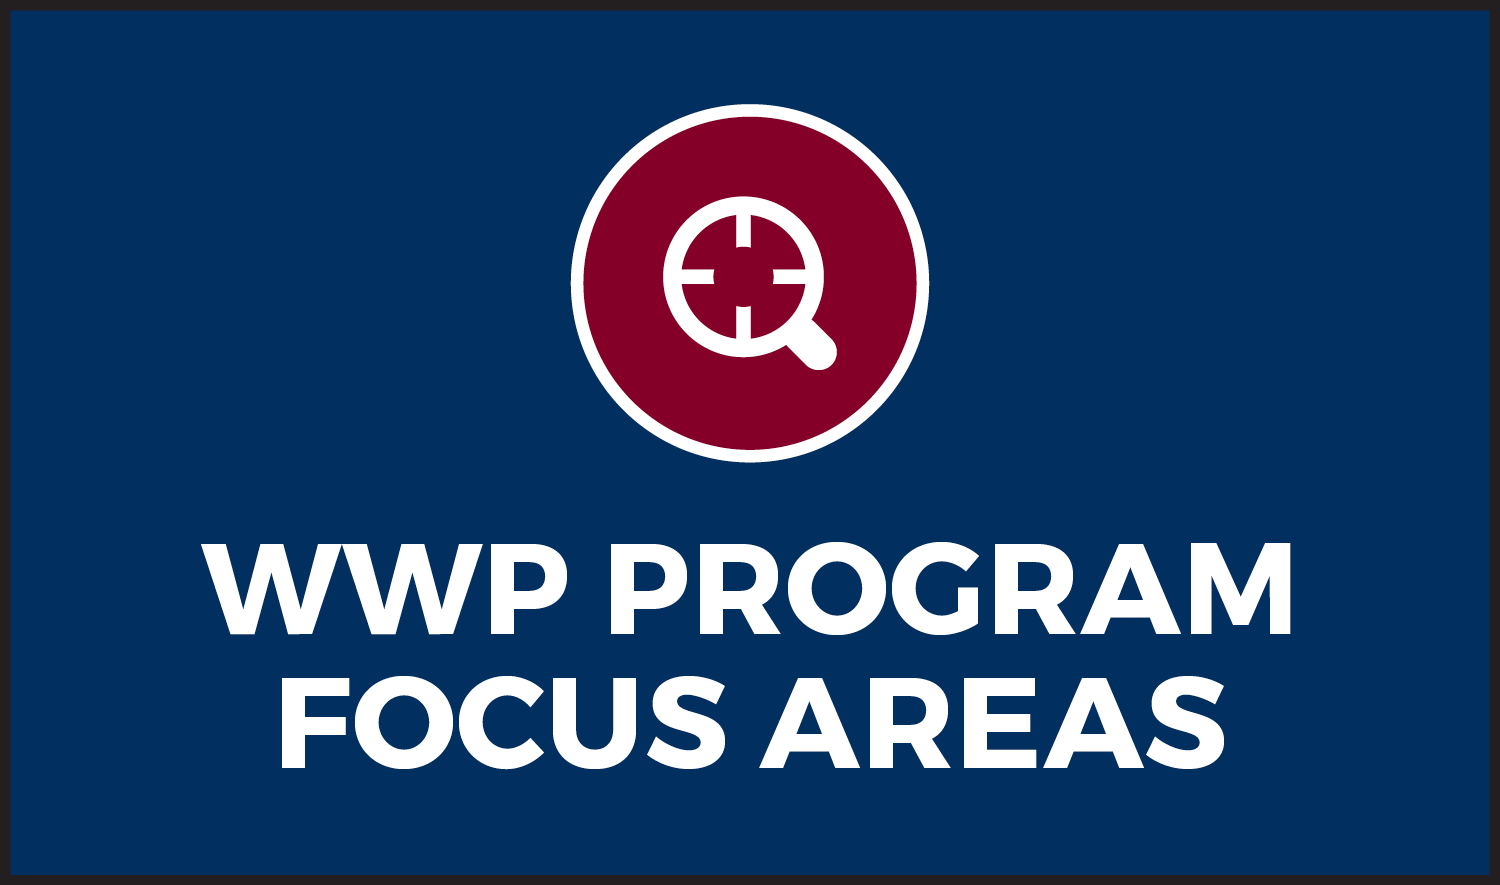 WWP Program Focus Areas